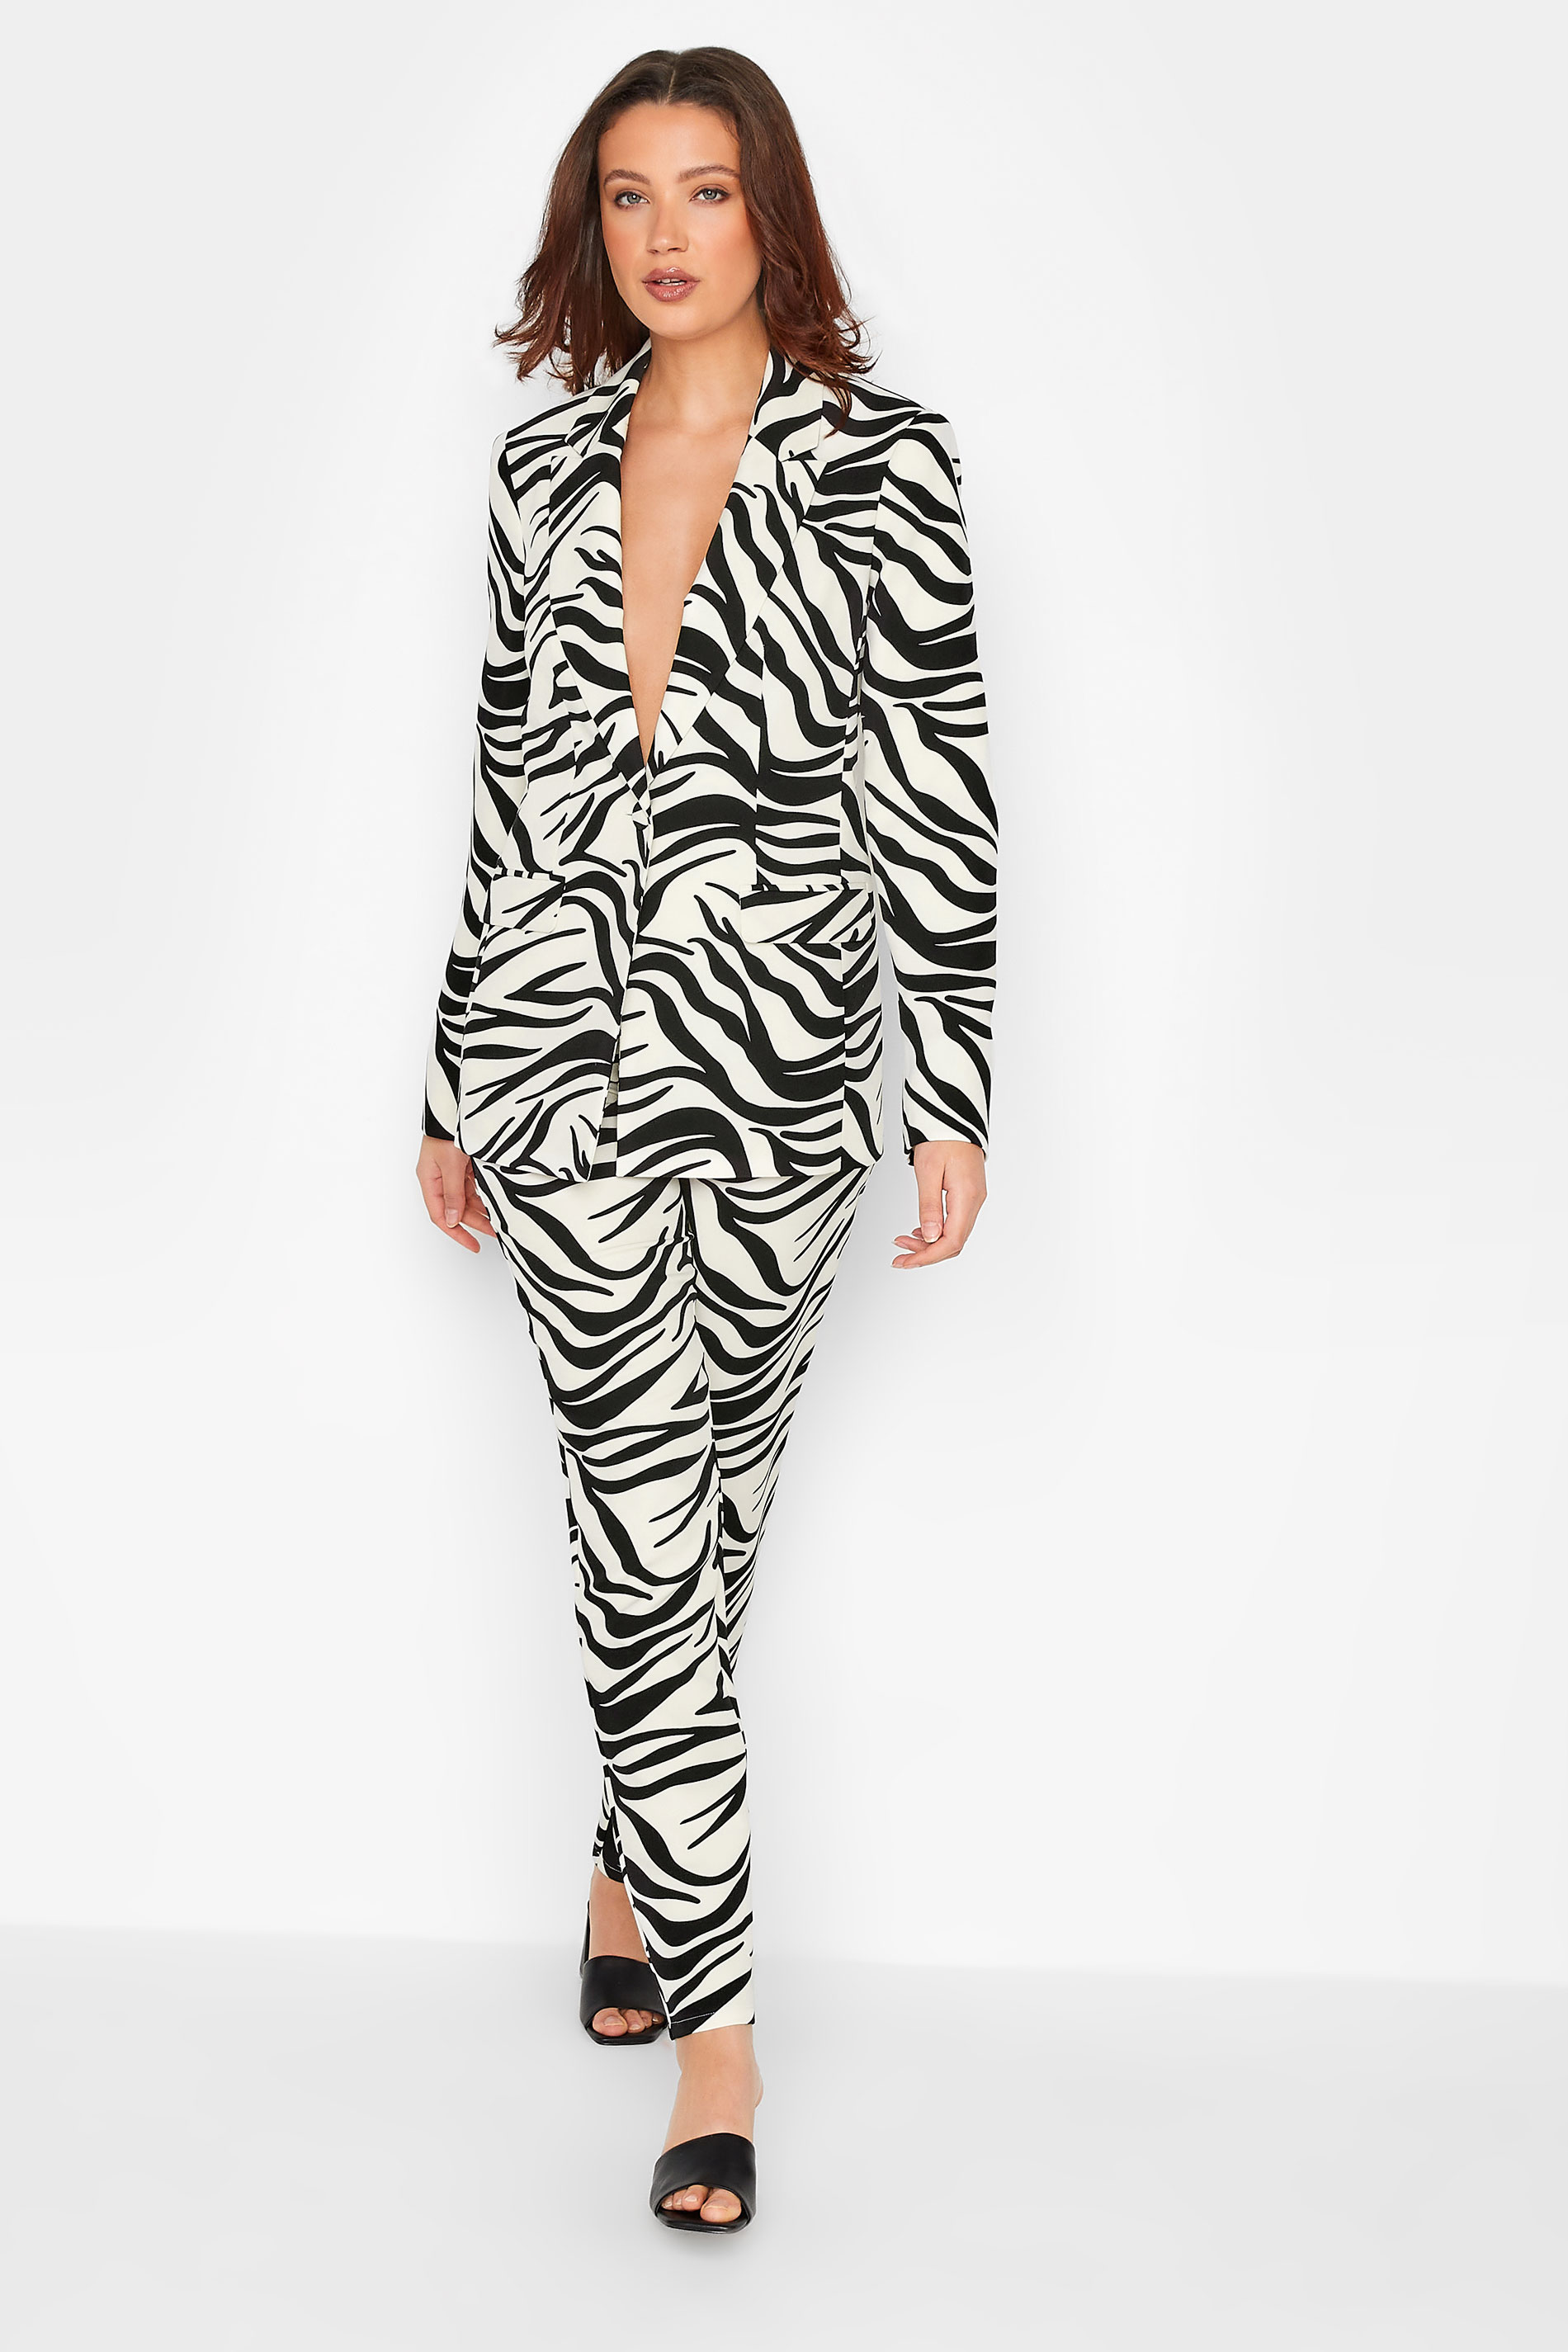 LTS Tall Black & White Zebra Print Tailored Blazer | Long Tall Sally  2